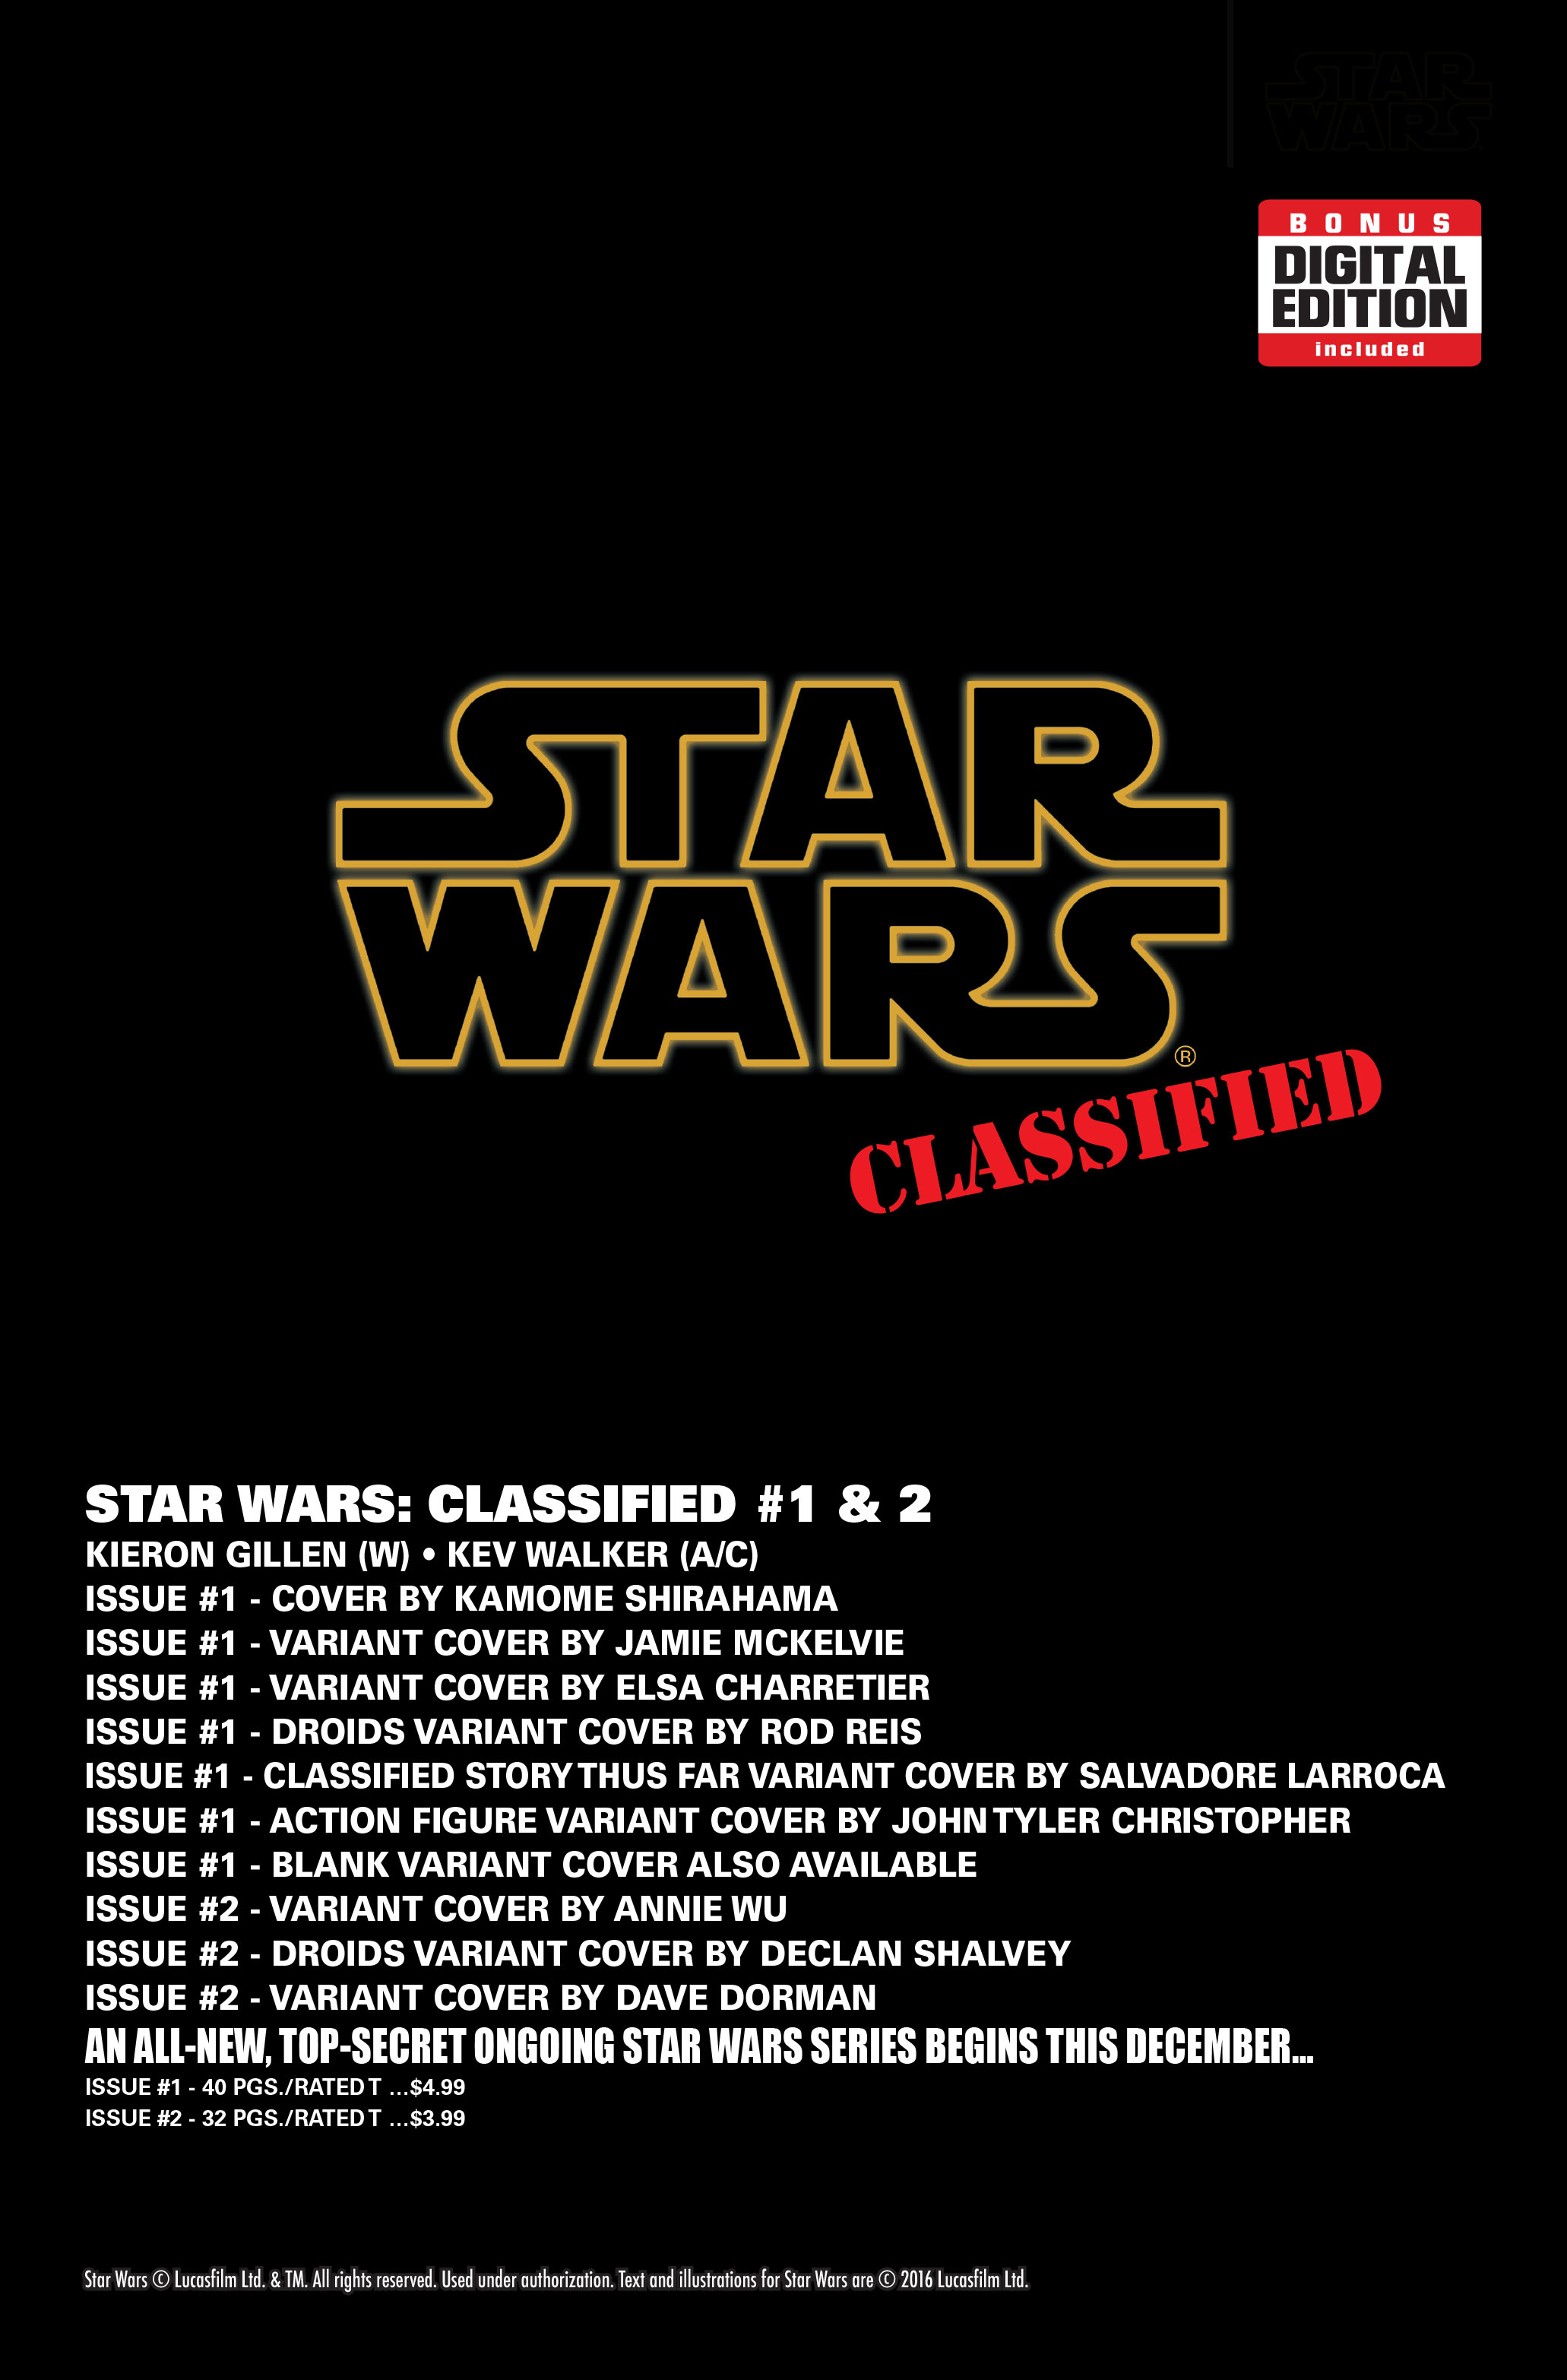 STAR WARS: CLASSIFIED #1 & 2